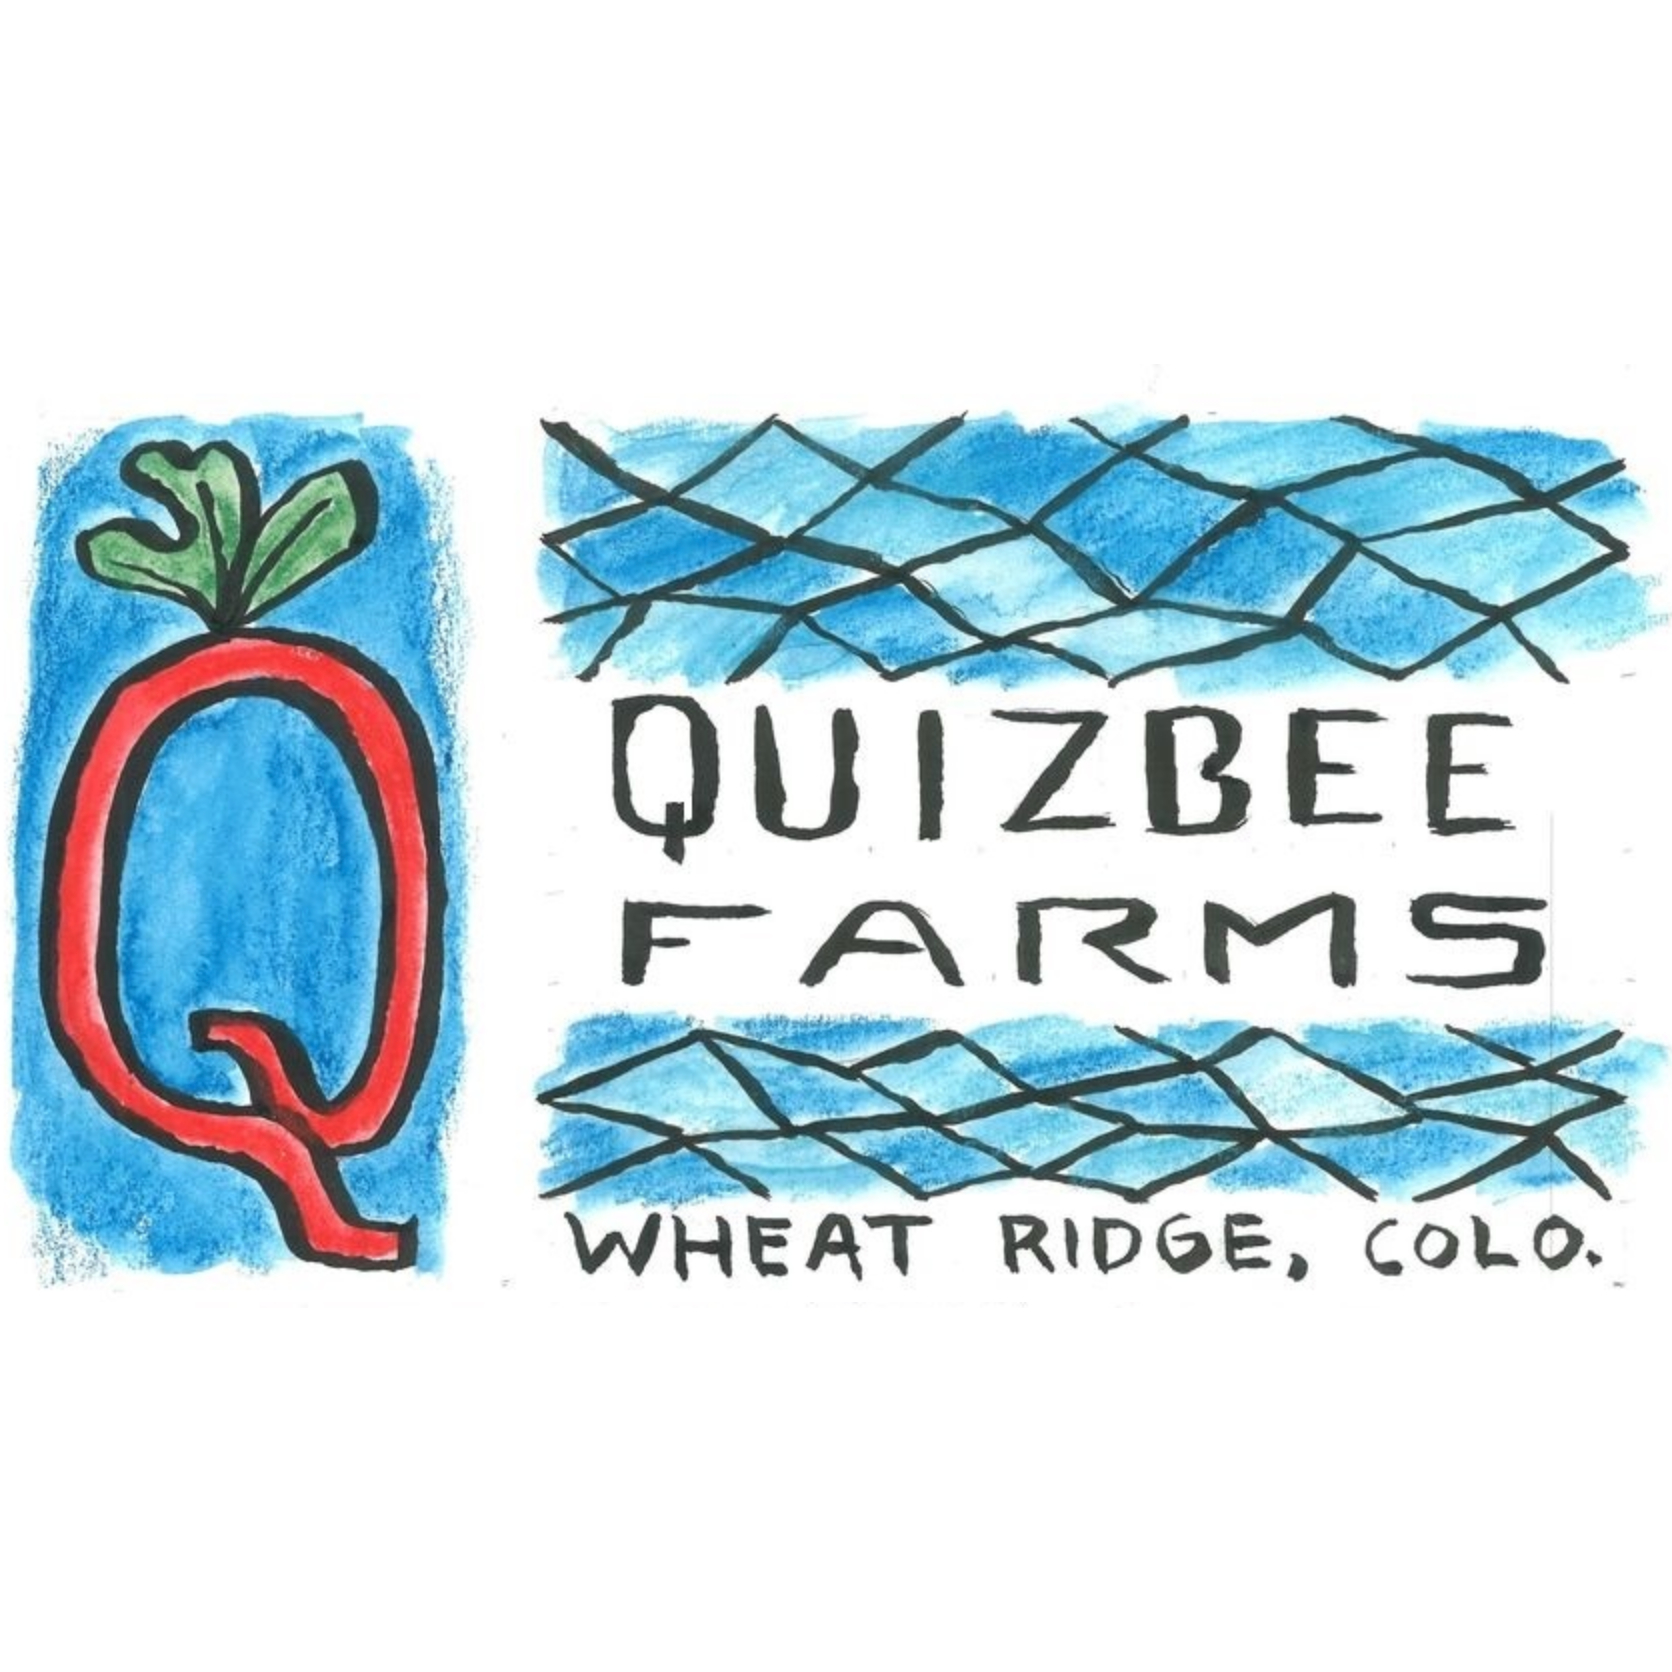 QuizBee Farm